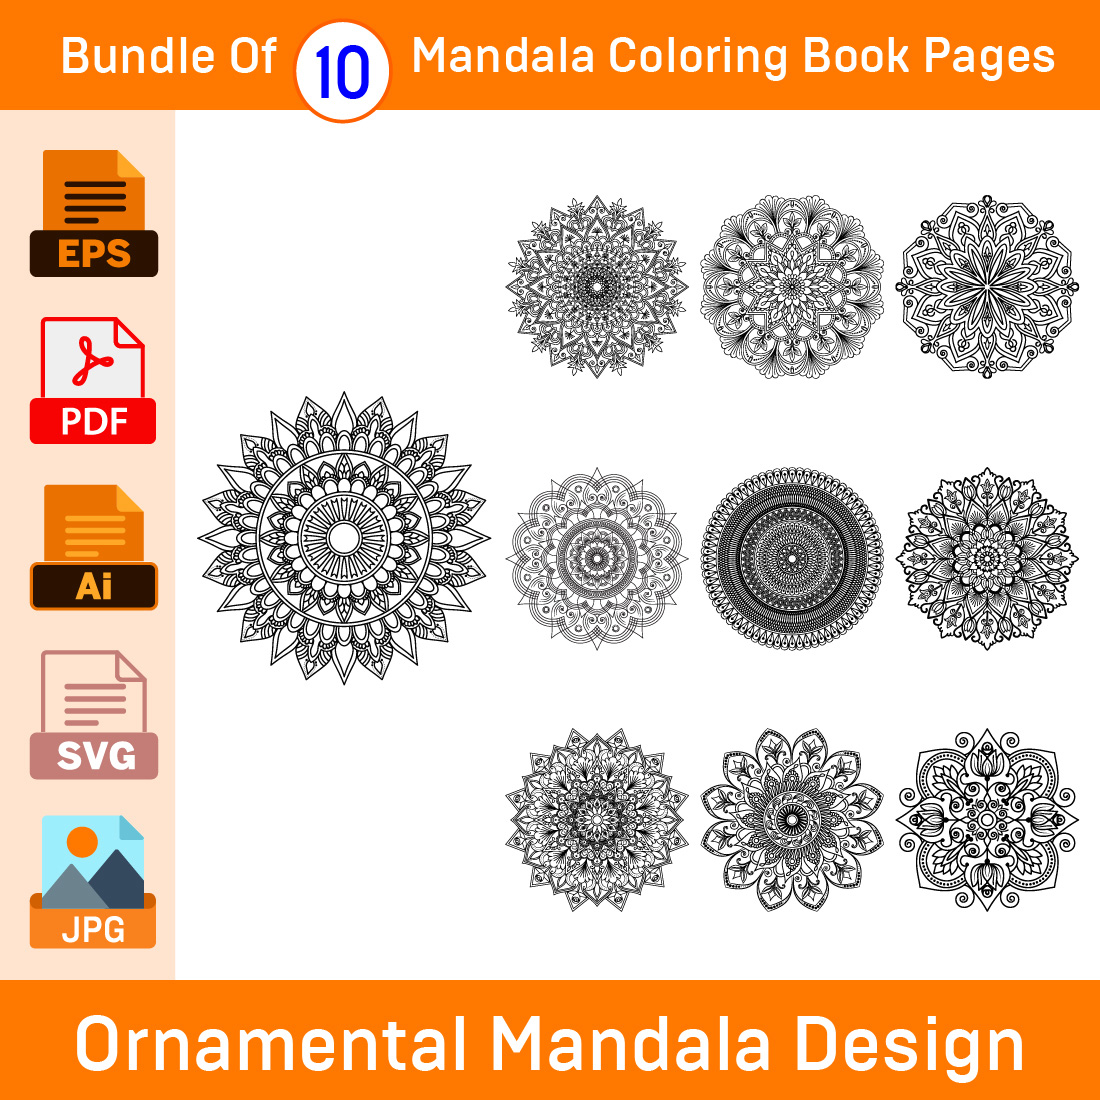 Bundle of 10 Ornamental Mandala Coloring Book Pages cover image.